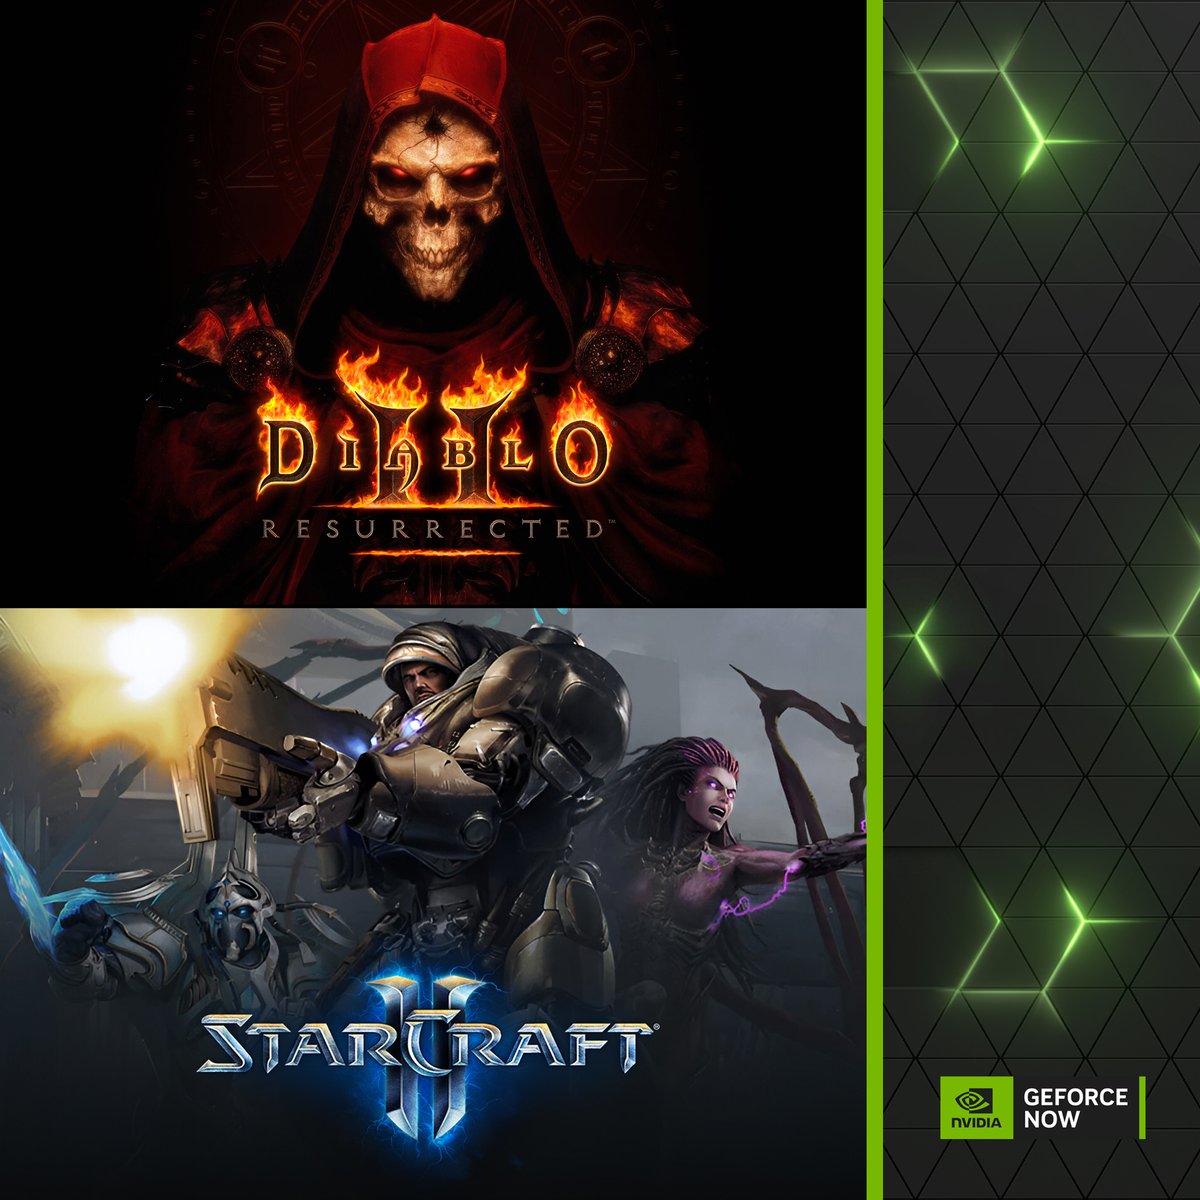 『StarCraft: Remastered』と「ディアブロ II & III」が GeForce NOW に対応！

今週の GeForce NOW ブログはこちら: nvda.ws/4b9g22y